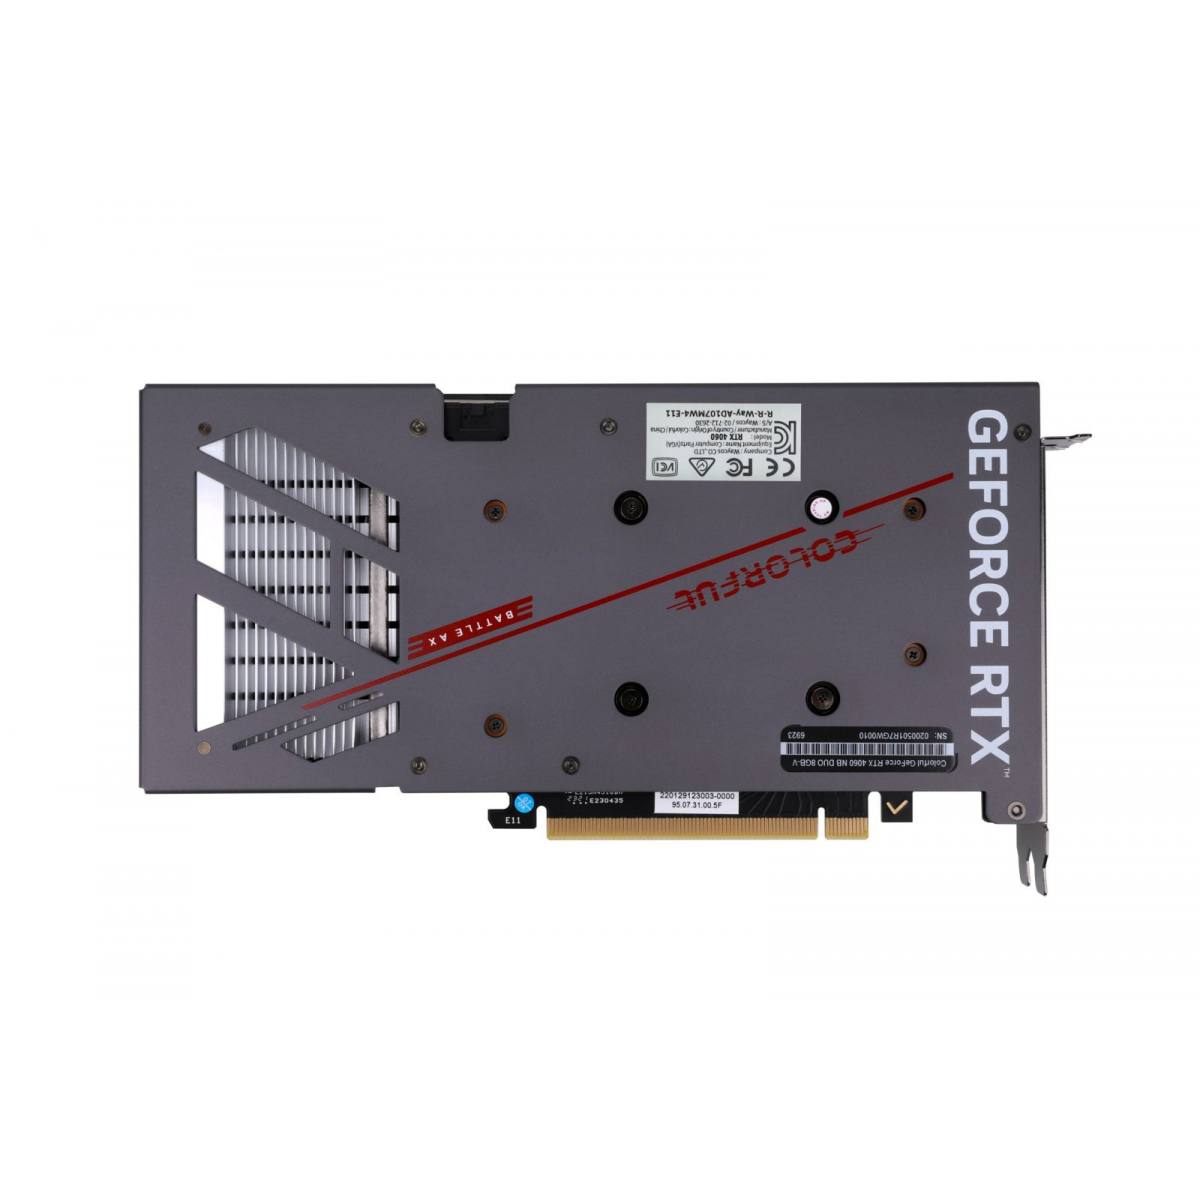 VGA Colorful GeForce RTX 4060 NB DUO 8GB-V